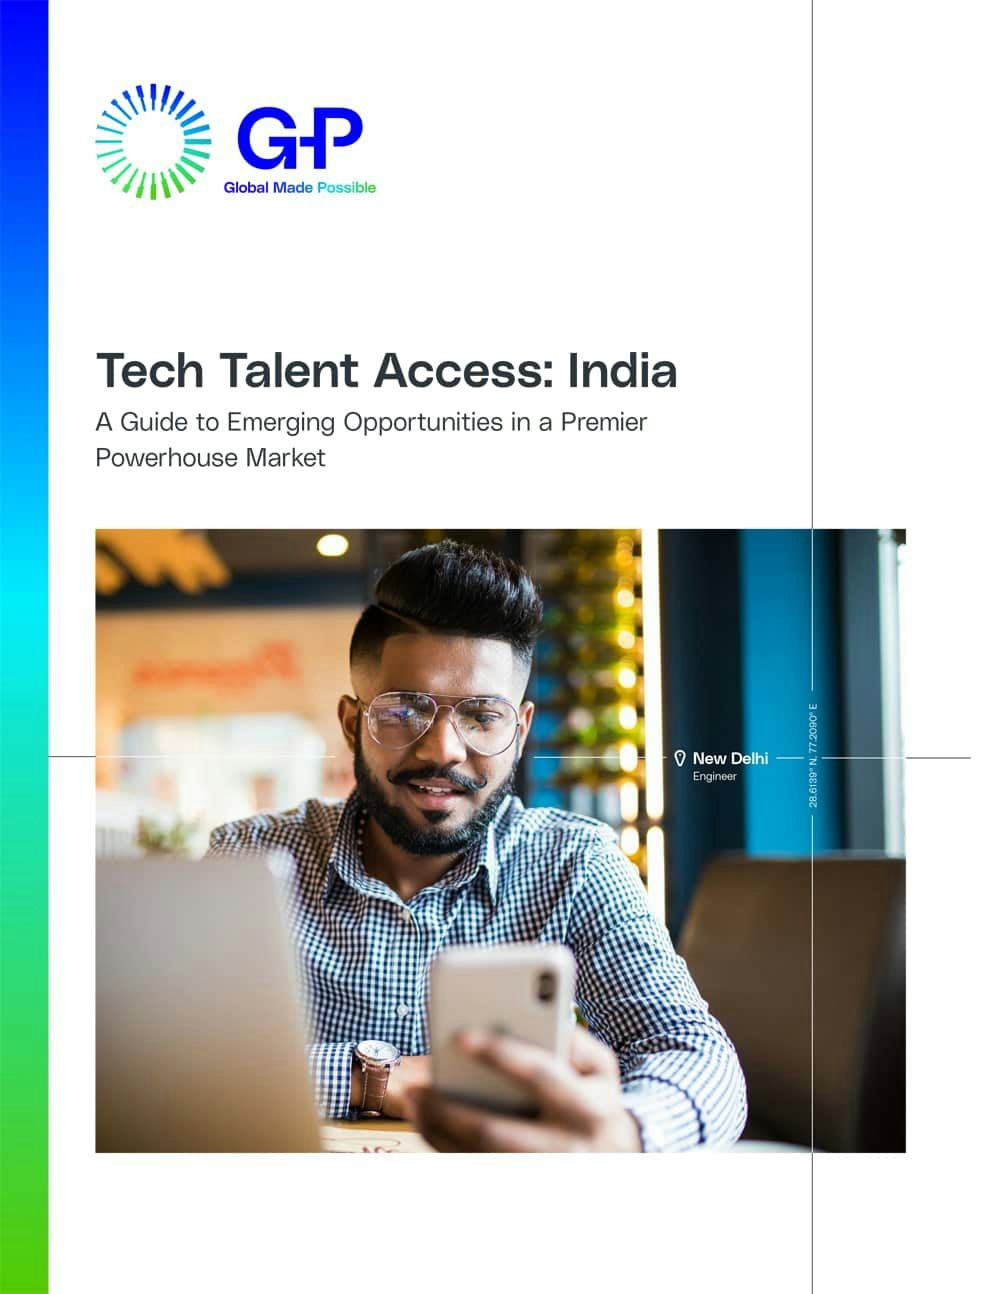 tech-talent-access-india-ebook-cover.jpg